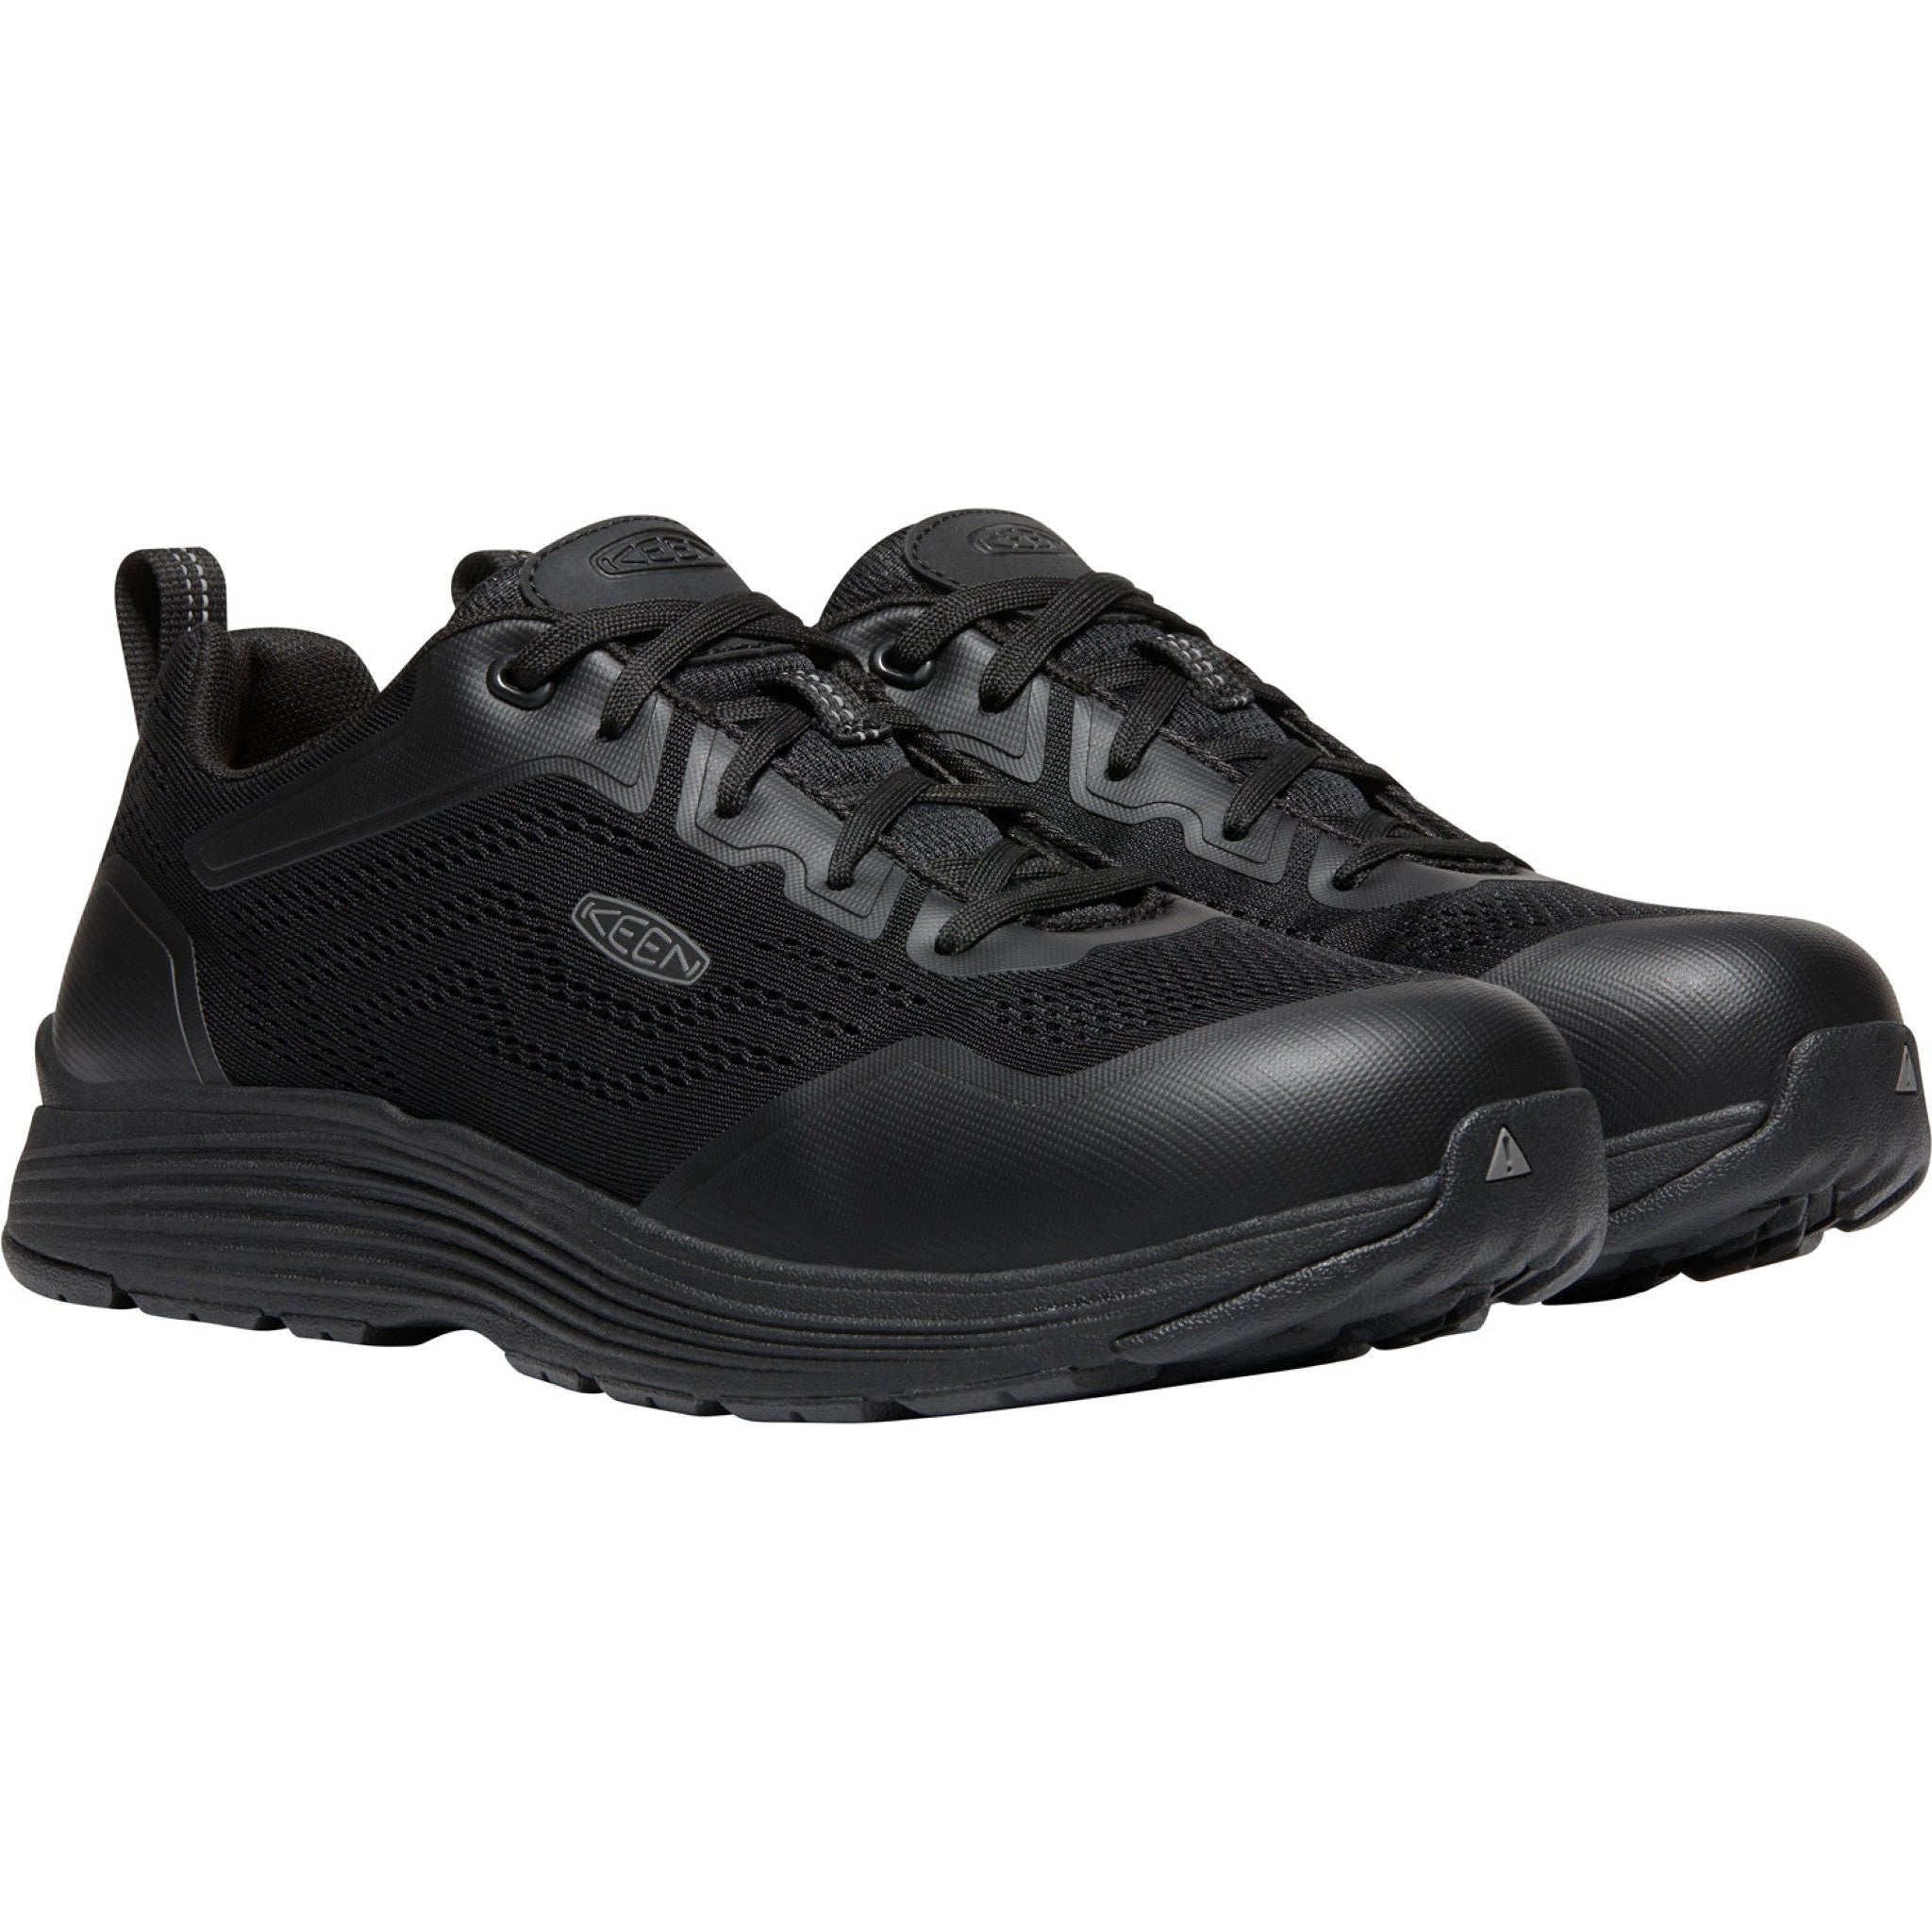 Keen Utility Men's Sparta II Alum Toe Work Shoe - Black - 1025569 7 / Medium / Black - Overlook Boots